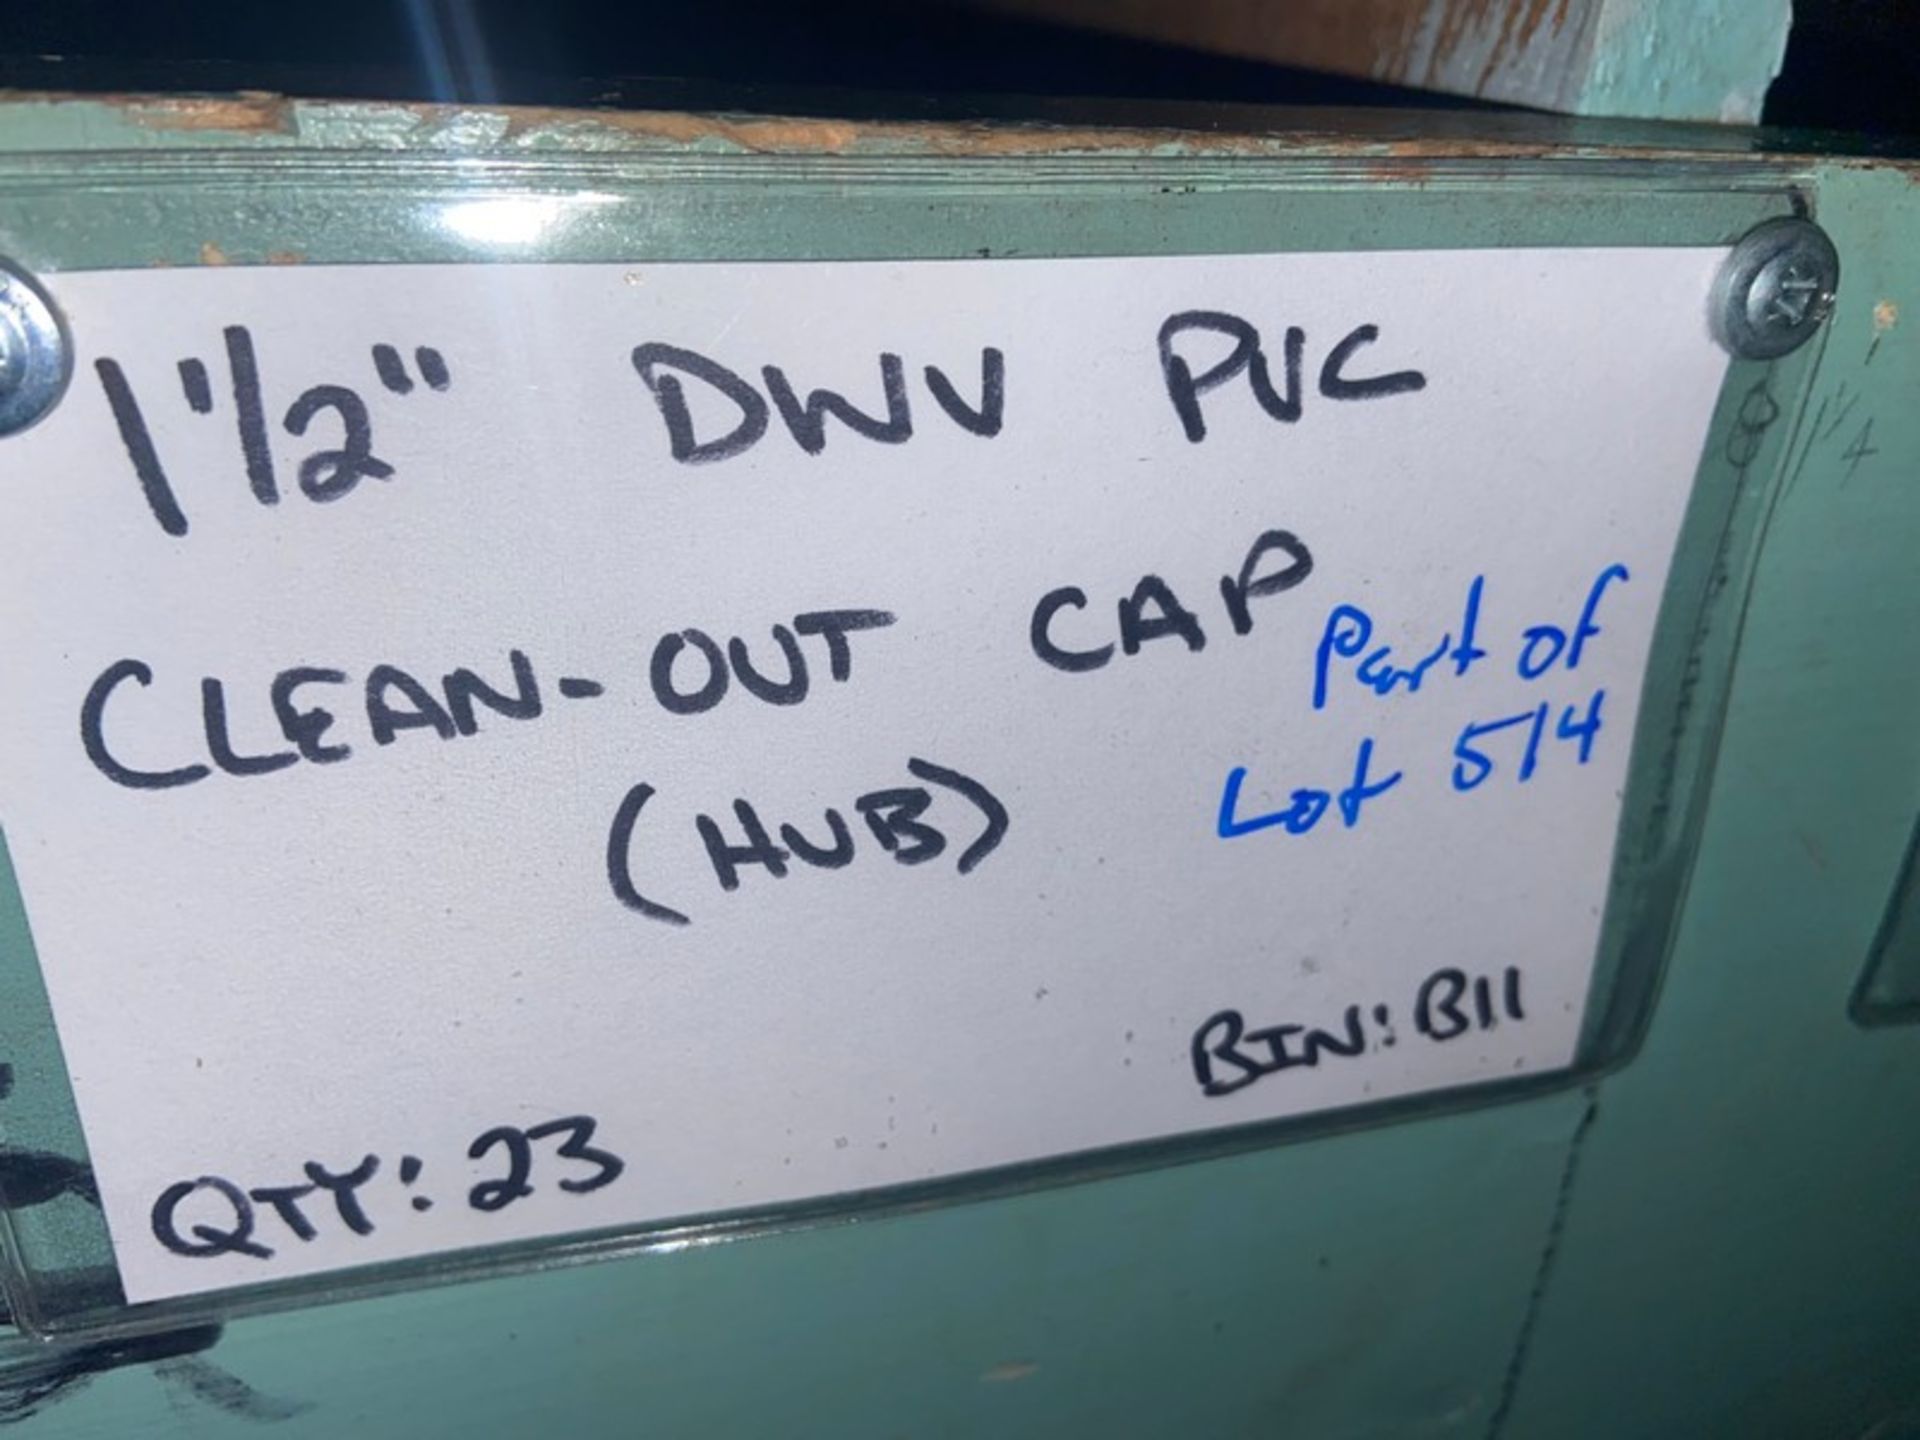 (5) 1 1/2” DWV PVC Clean-out CAP (STREET) (Bin: B11), Includes (23) 1 1/2” DWV PVC Clean-out CAP ( - Image 4 of 9